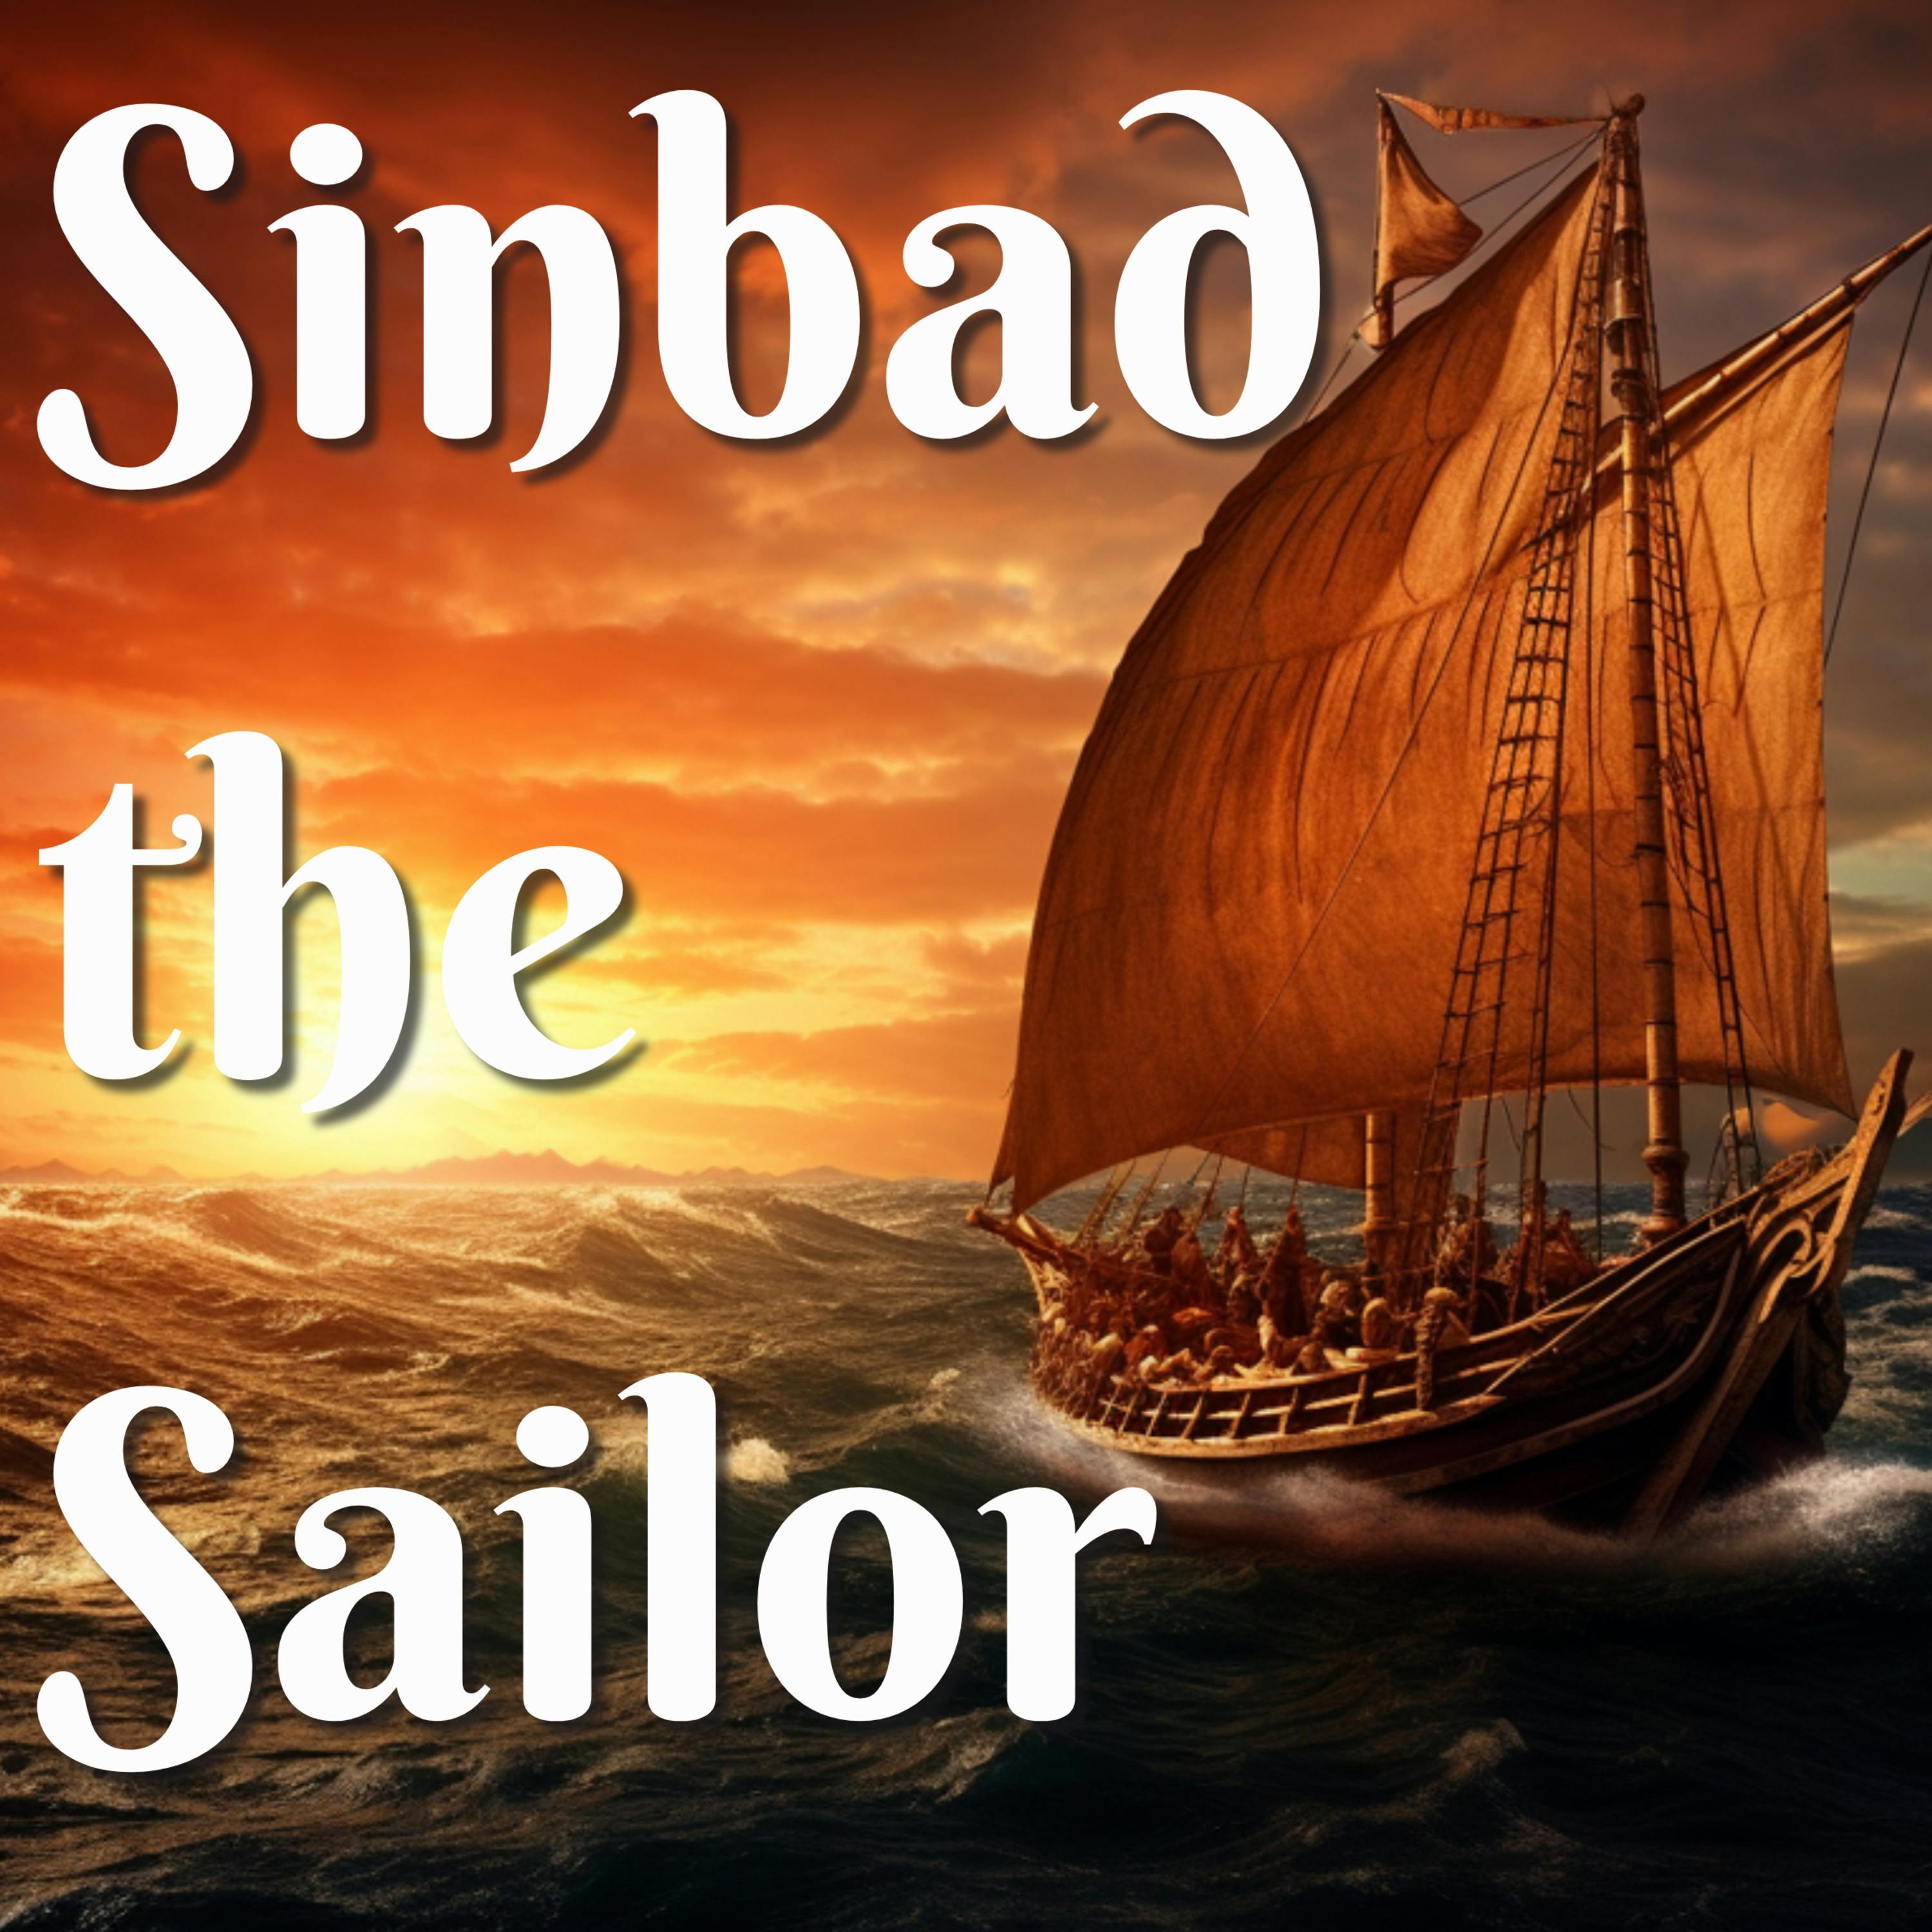 Sinbad the Sailor - Arabian Nights Bedtime Story